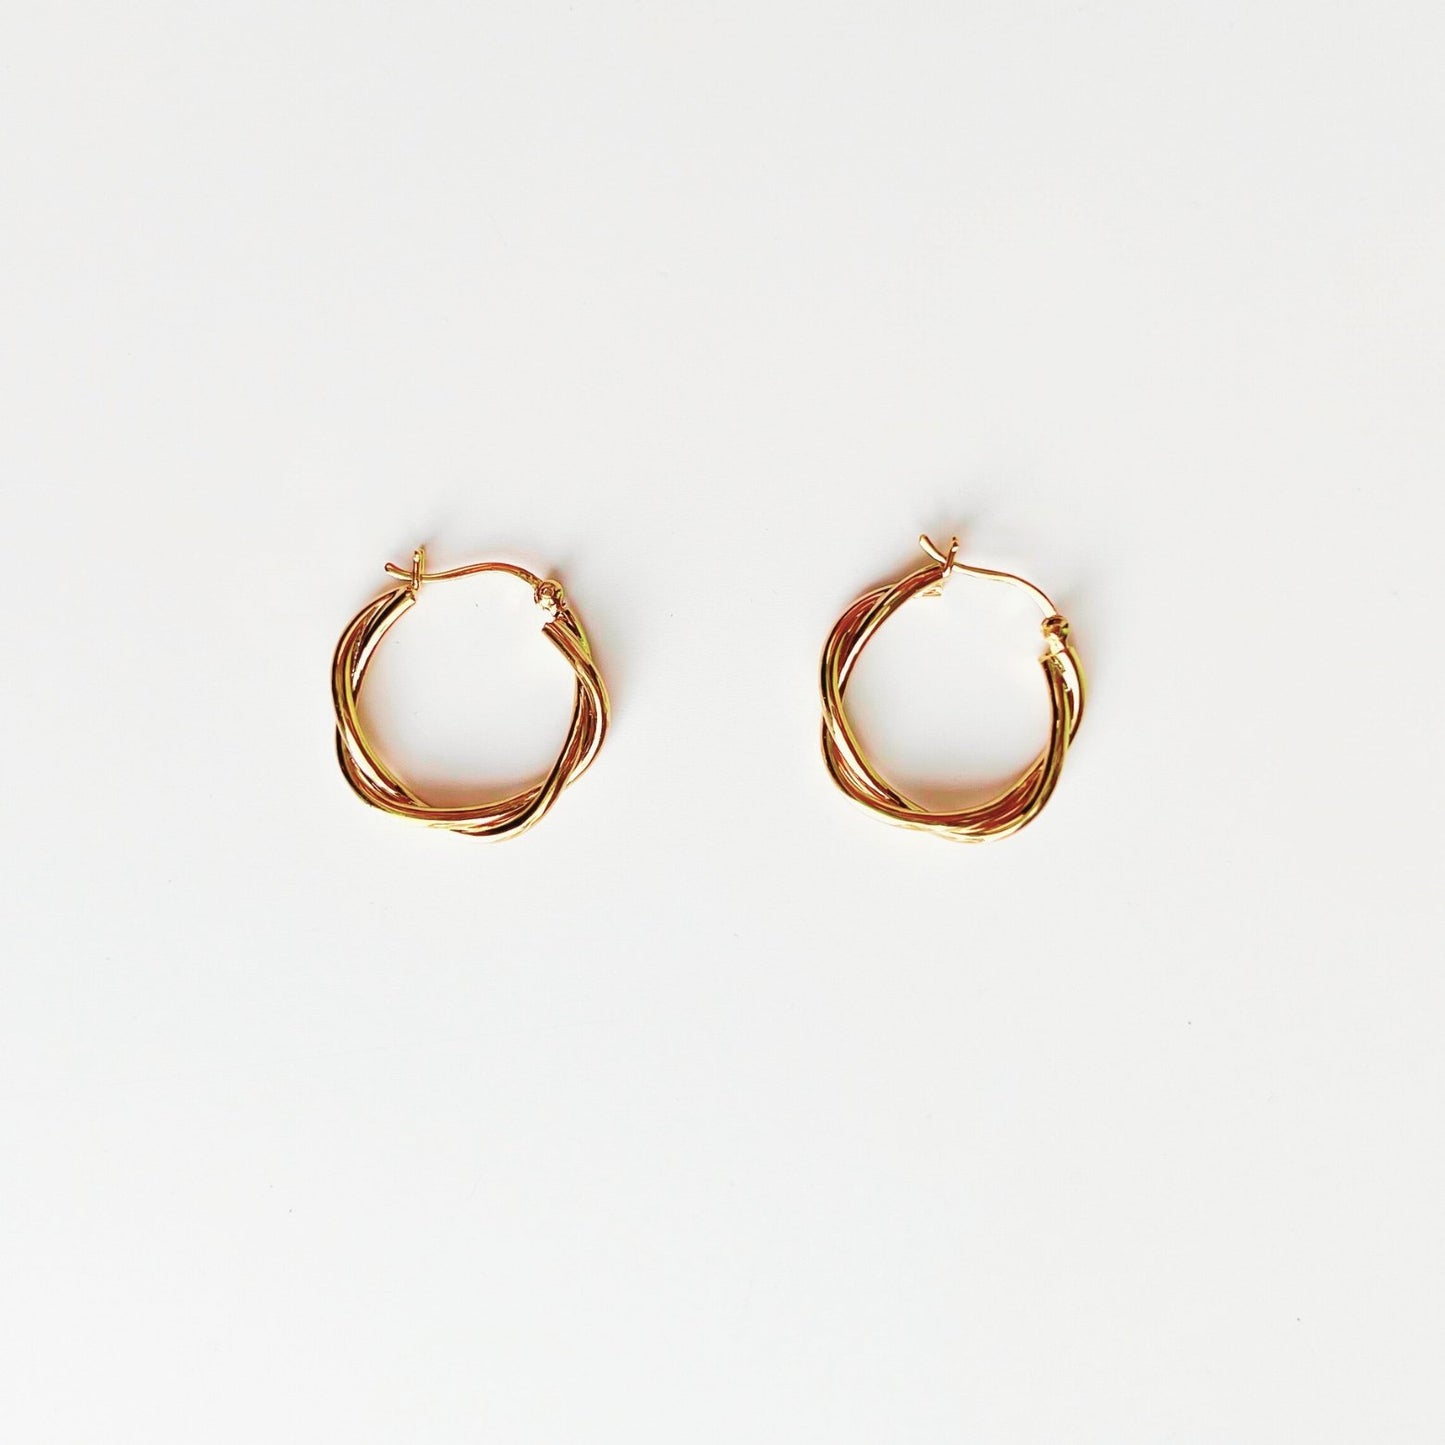 Mi-sun 18k Gold Vermeil Sterling Silver Earrings- KORYANGS Brand